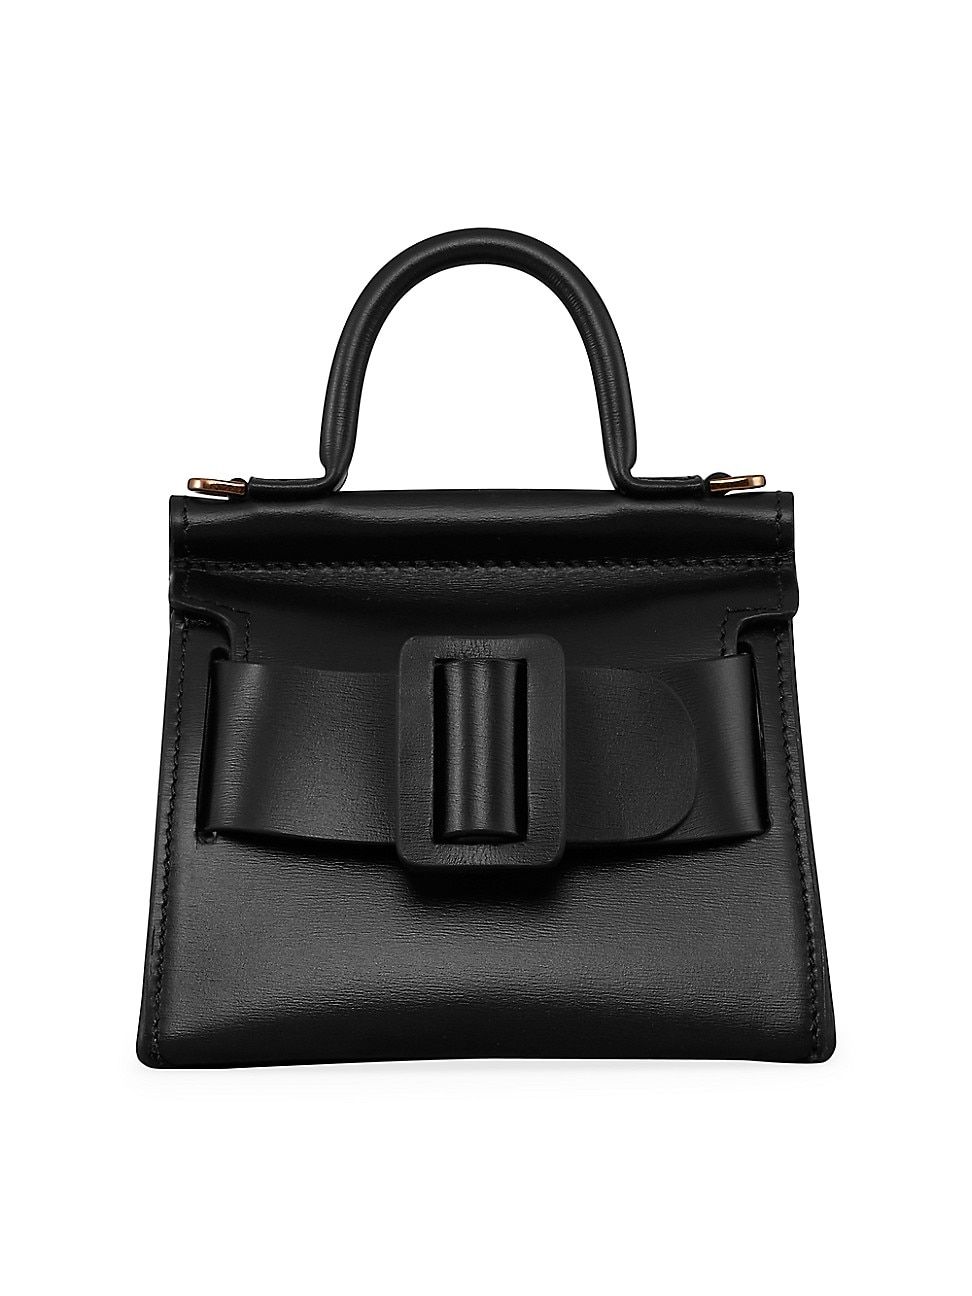 Boyy Women's Karl Surreal Leather Top Handle Bag - Black | Saks Fifth Avenue